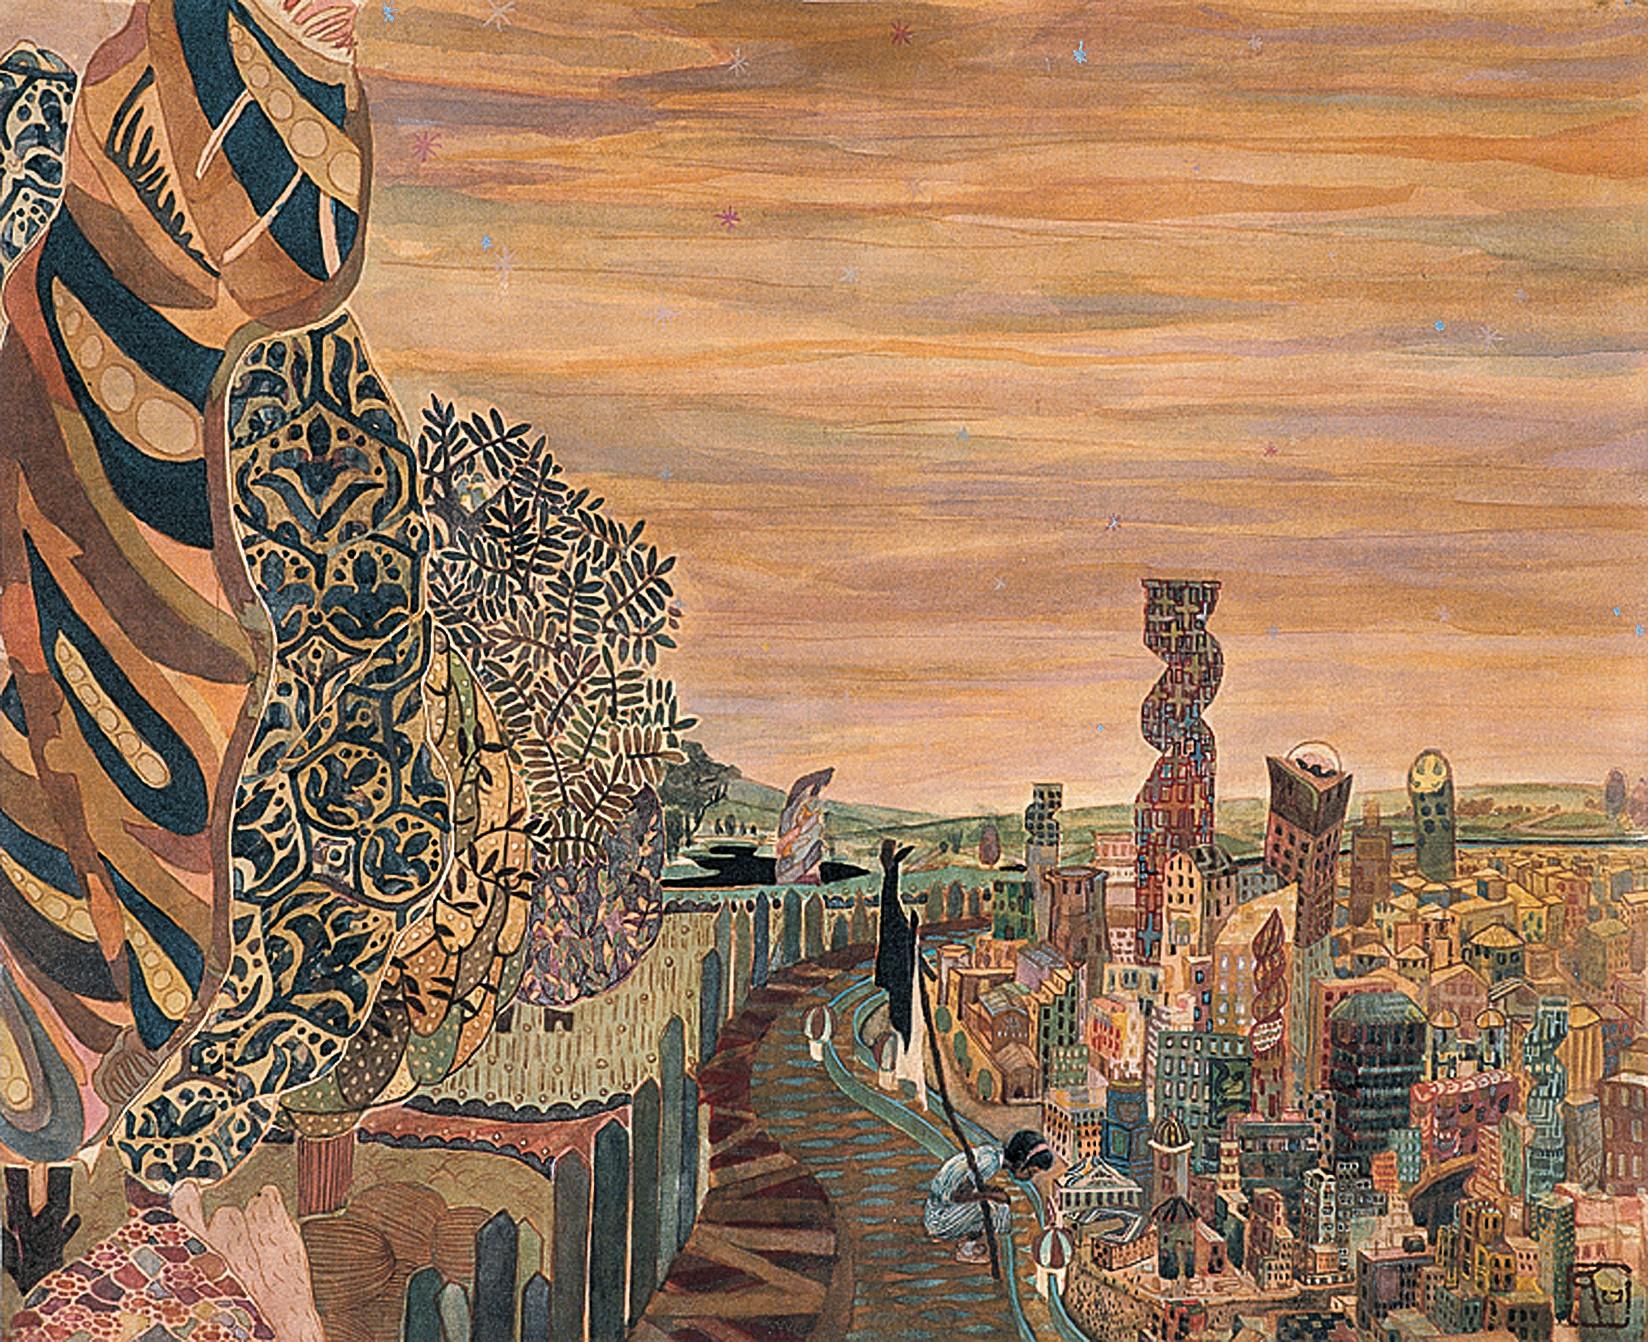 Maki Kuchida Landscape Painting - "The City" landscape figurative silk painting adventure journey of life courage